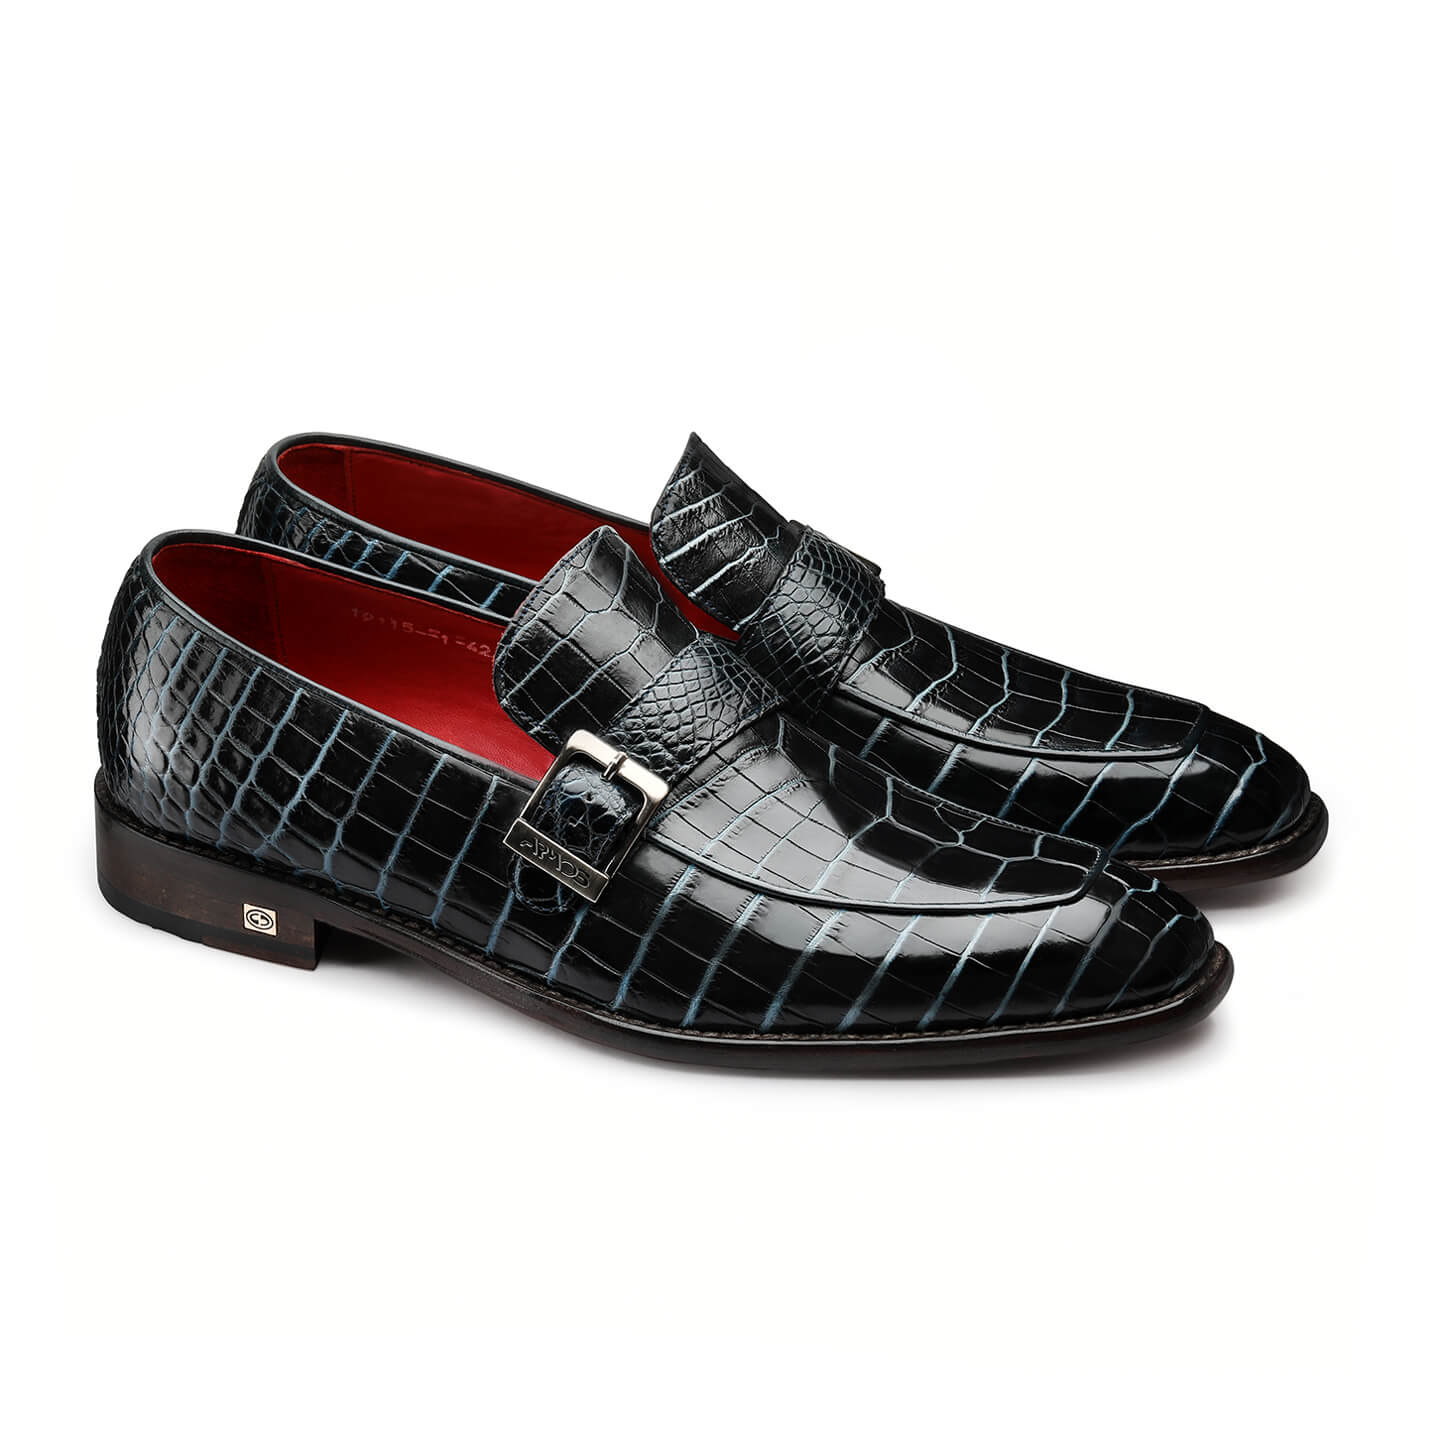 Crocodile leather loafers